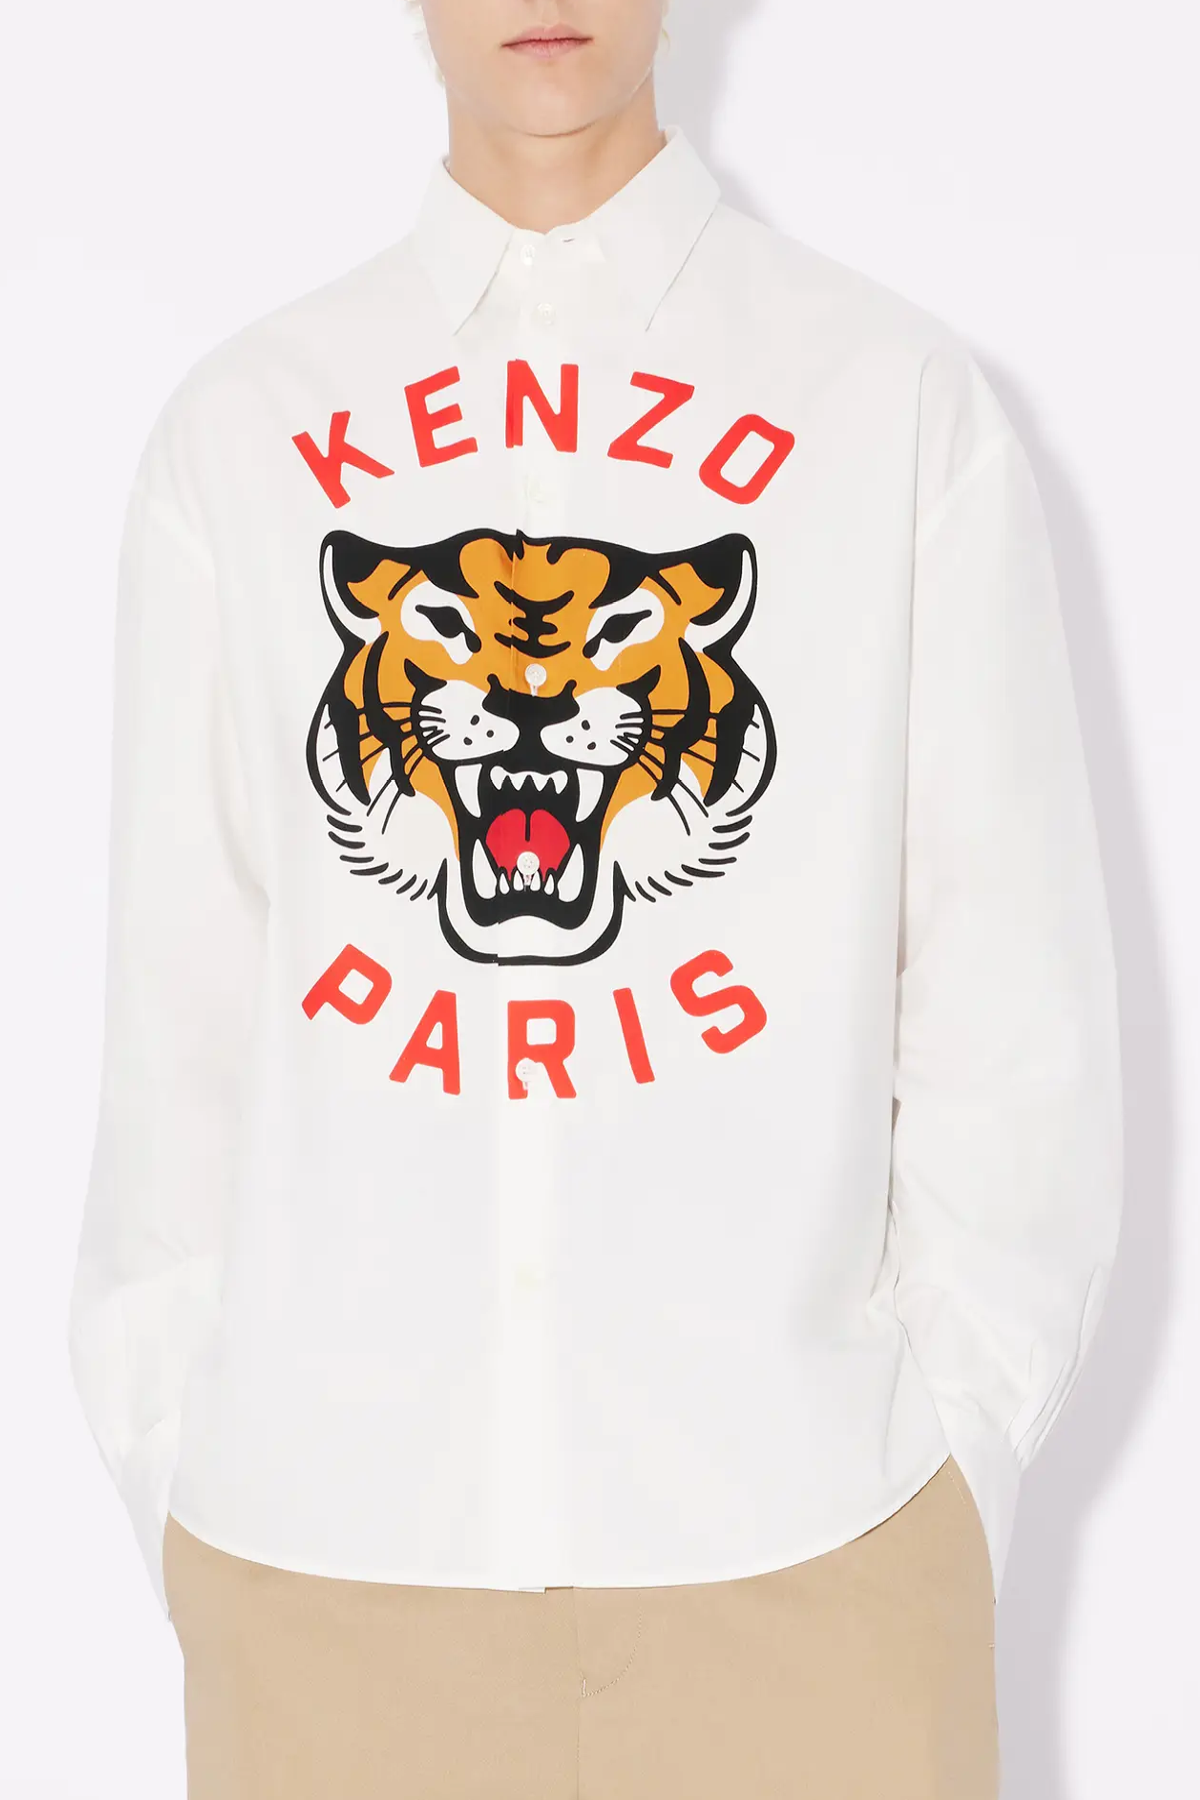 Kenzo Lucky Tiger Shirt - White